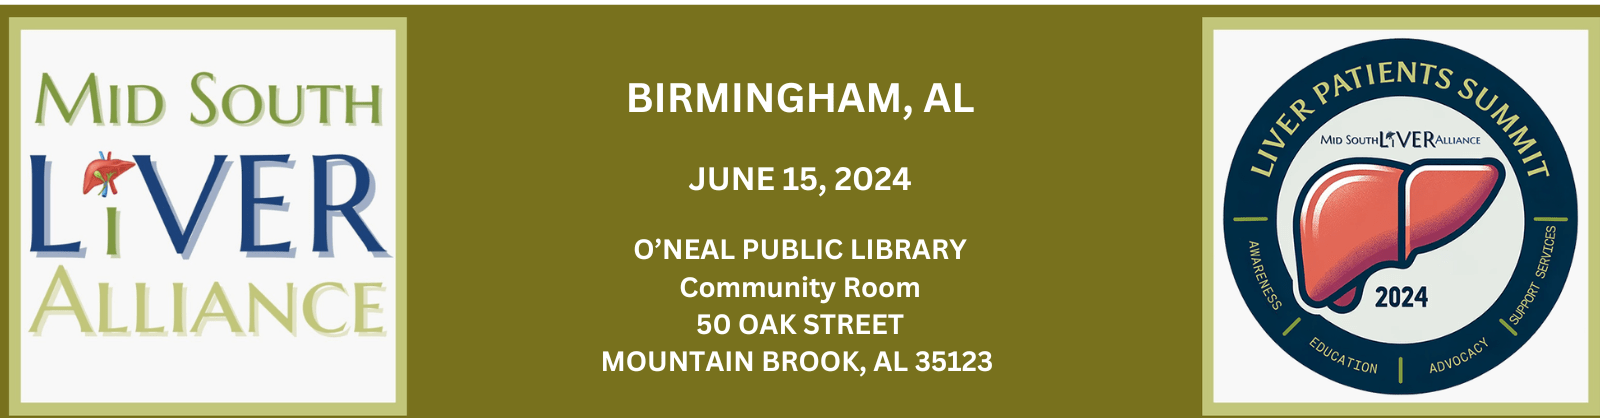 Mid South Liver Alliance Birmingham Patient Summit, O'Neal Library Community Room, 50 Oak Street, Mountain Brook, AL